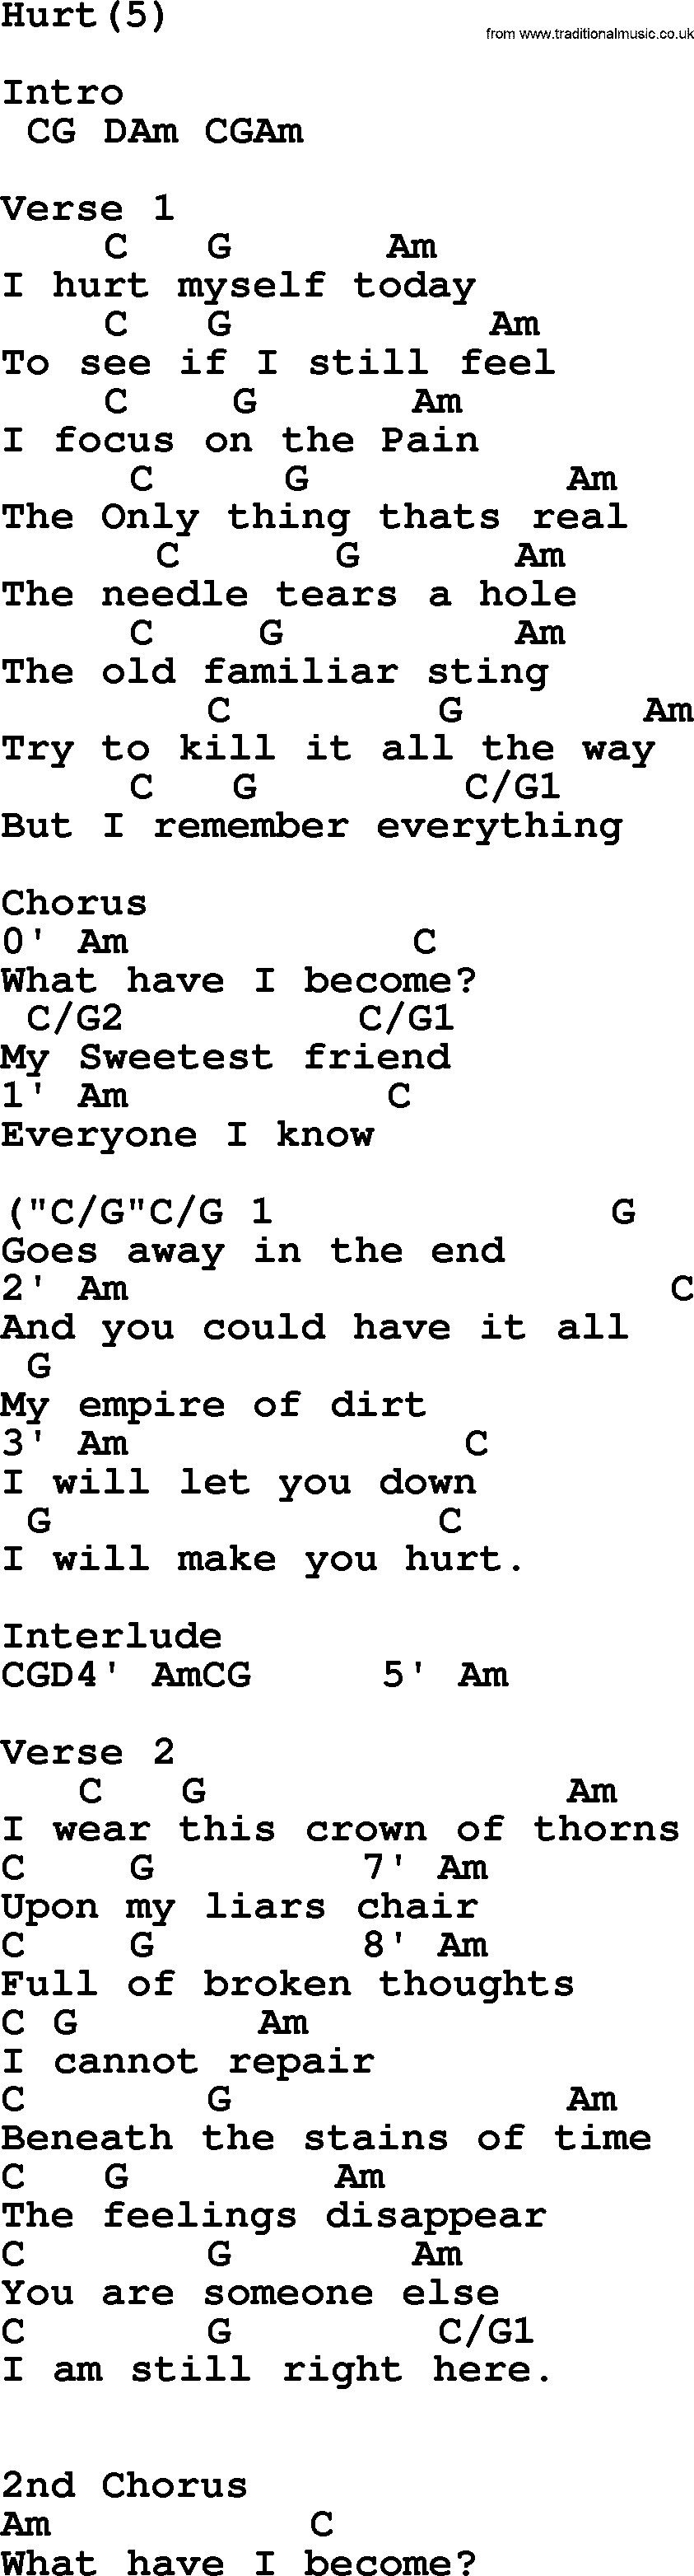 Johnny Cash song Hurt(5), lyrics and chords